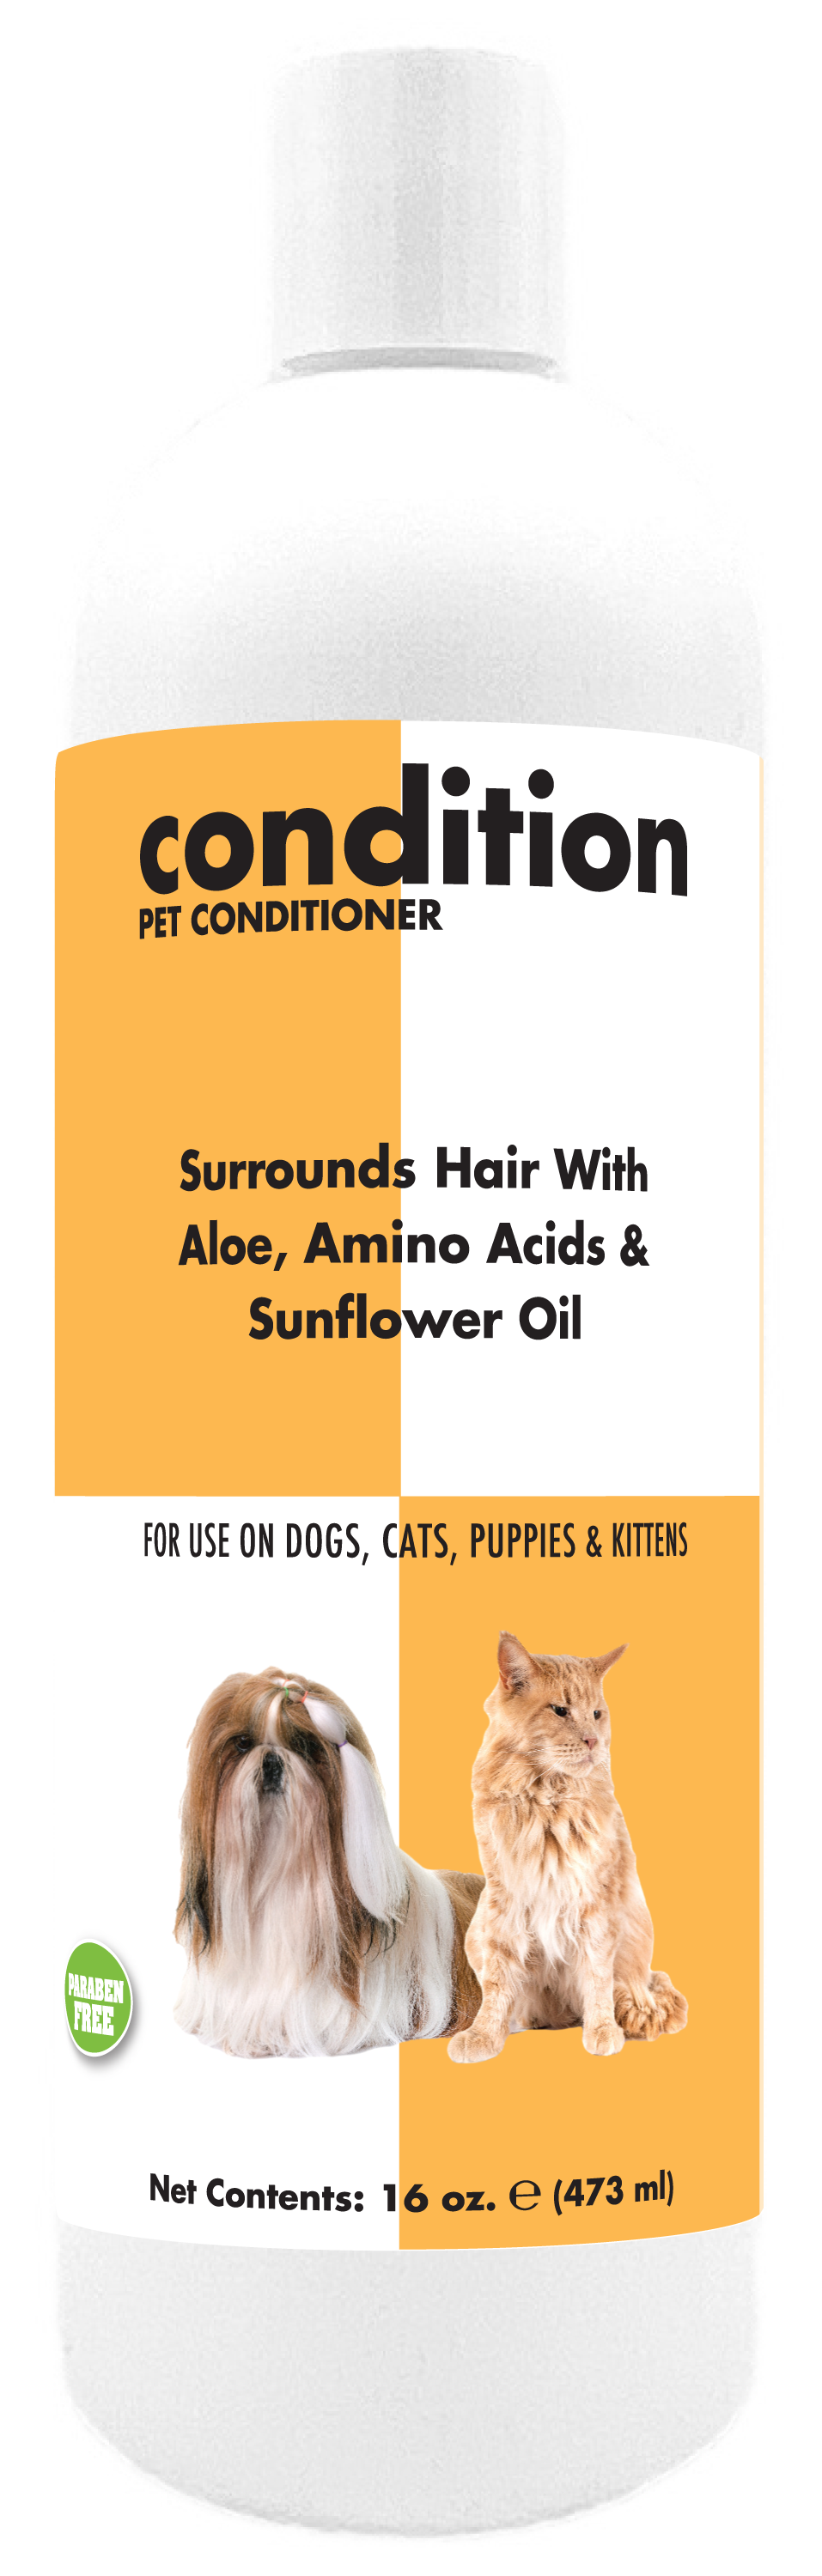 Condition Pet Conditioner